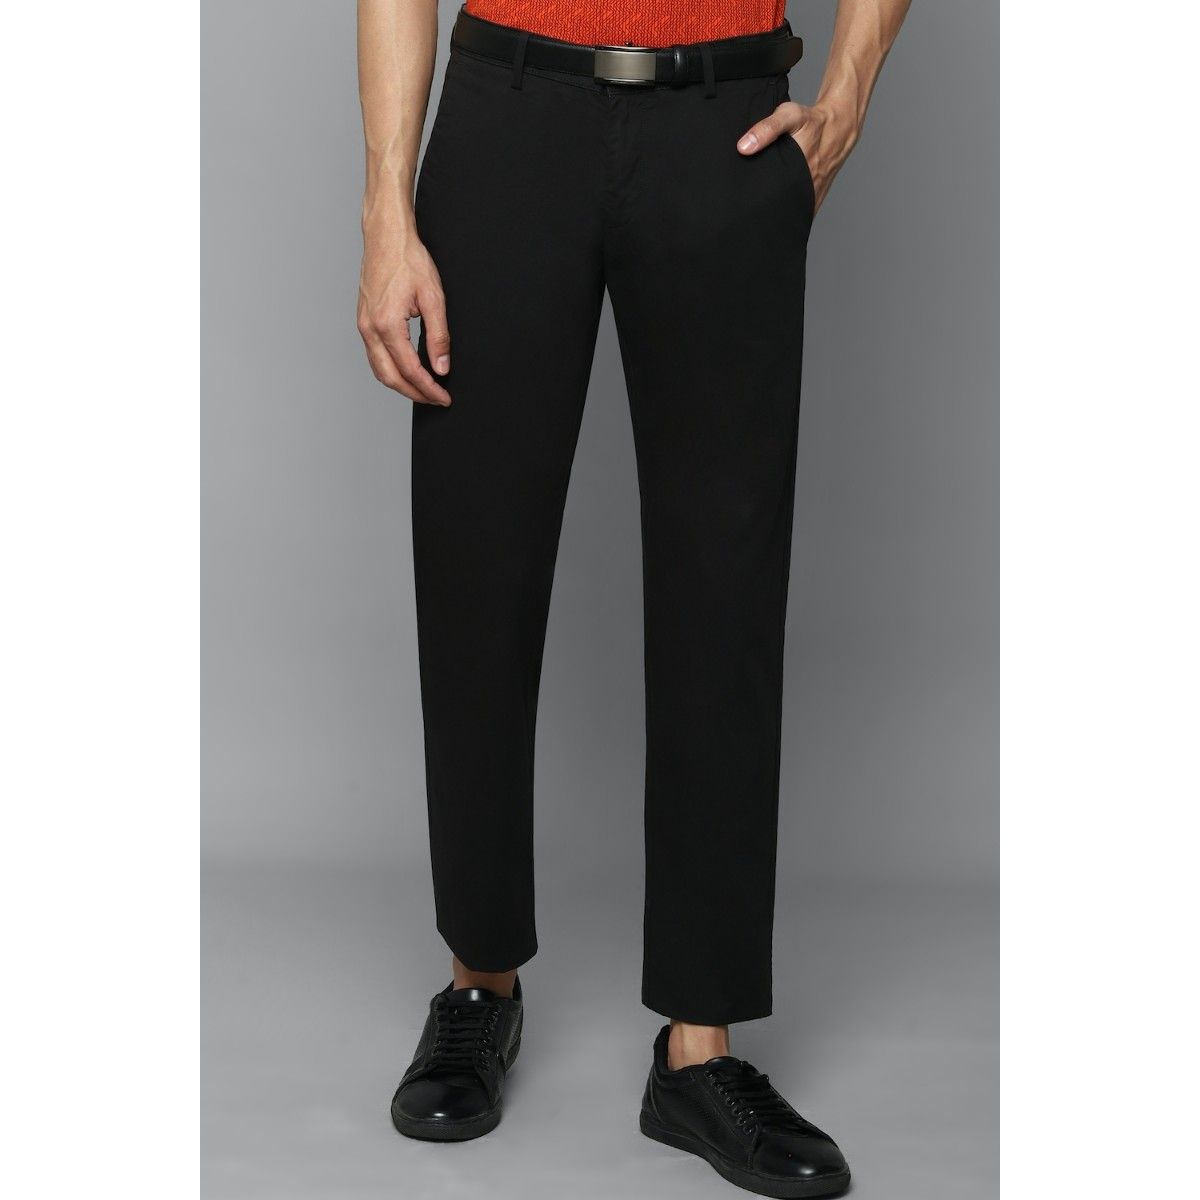 Buy Allen Solly Junior Black Trousers for Girls Clothing Online @ Tata CLiQ